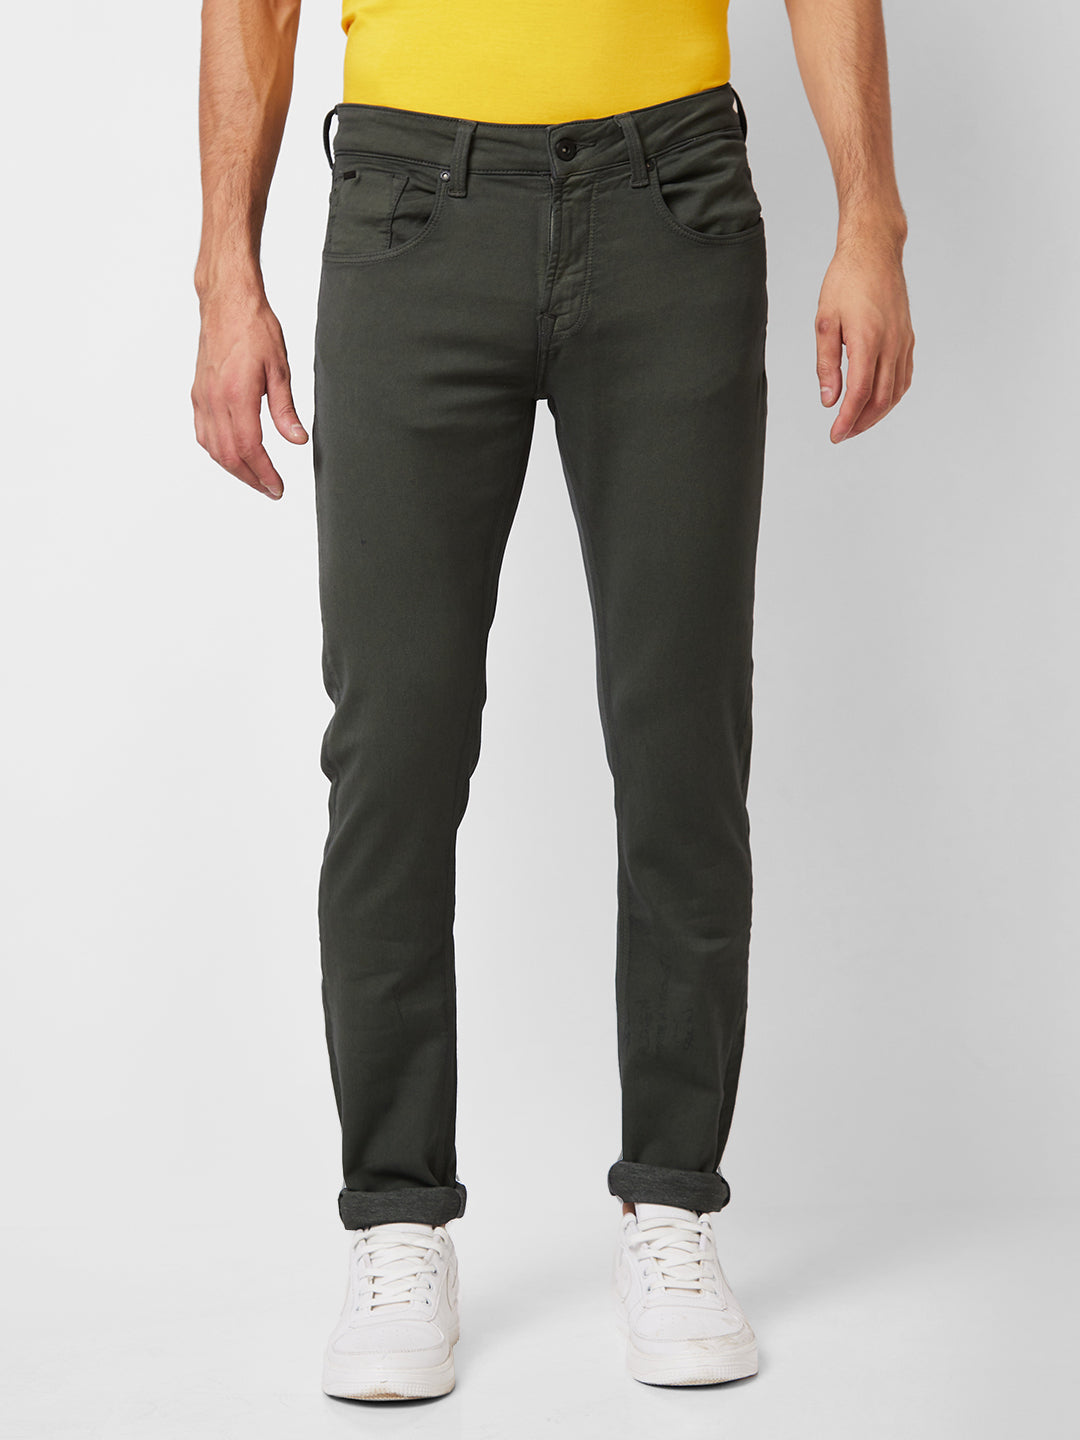 Spykar Low Rise Skinny Fit Green Jeans For Men